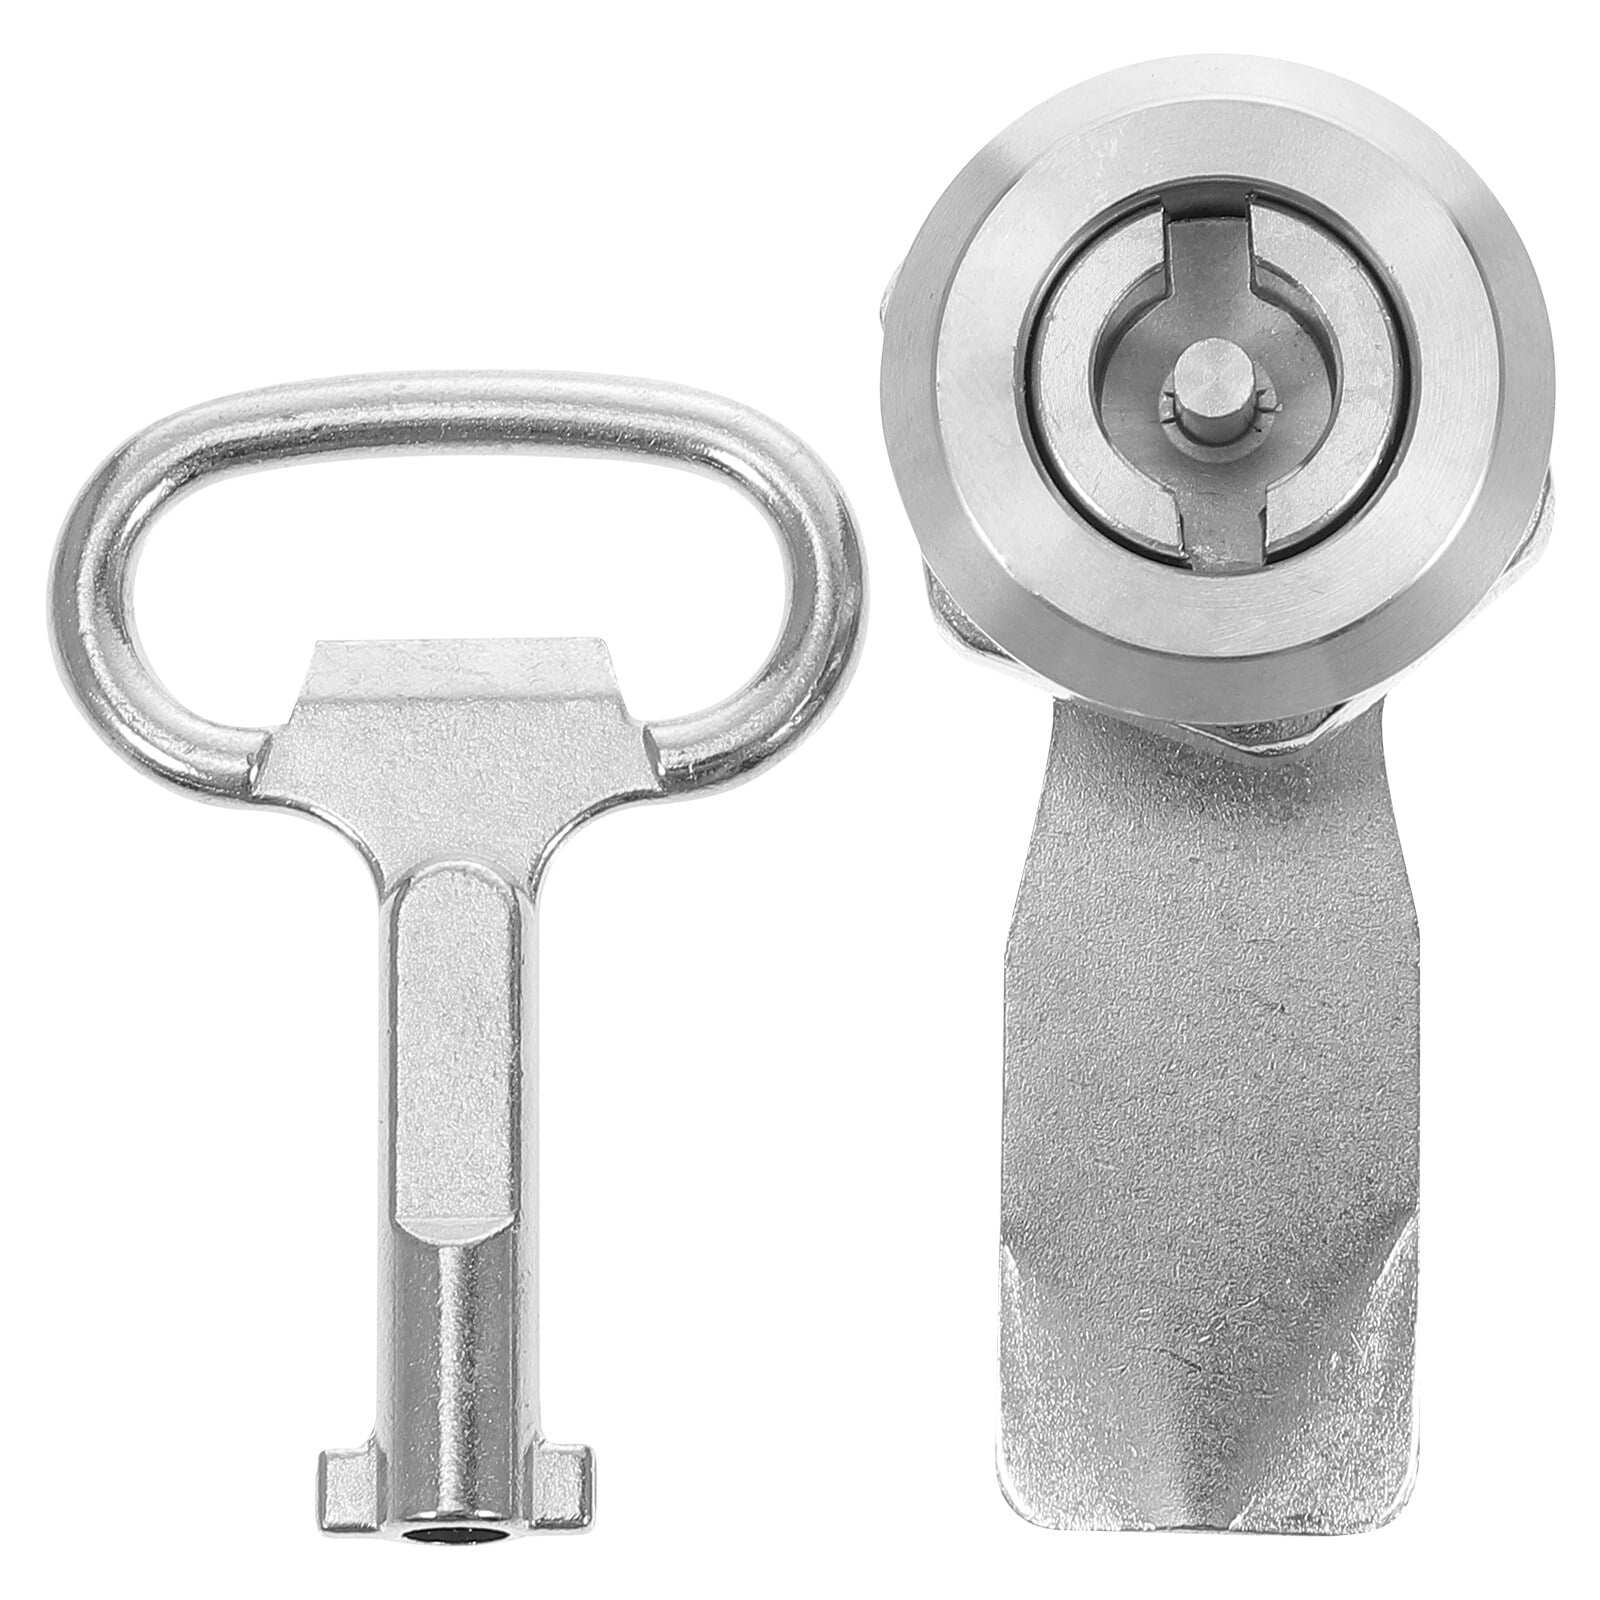 Frcolor 2pcs Drawer Locks Wardrobe Locks with Keys Duarble Furniture Safety Locks, Adult Unisex, Size: 6x4.2cm